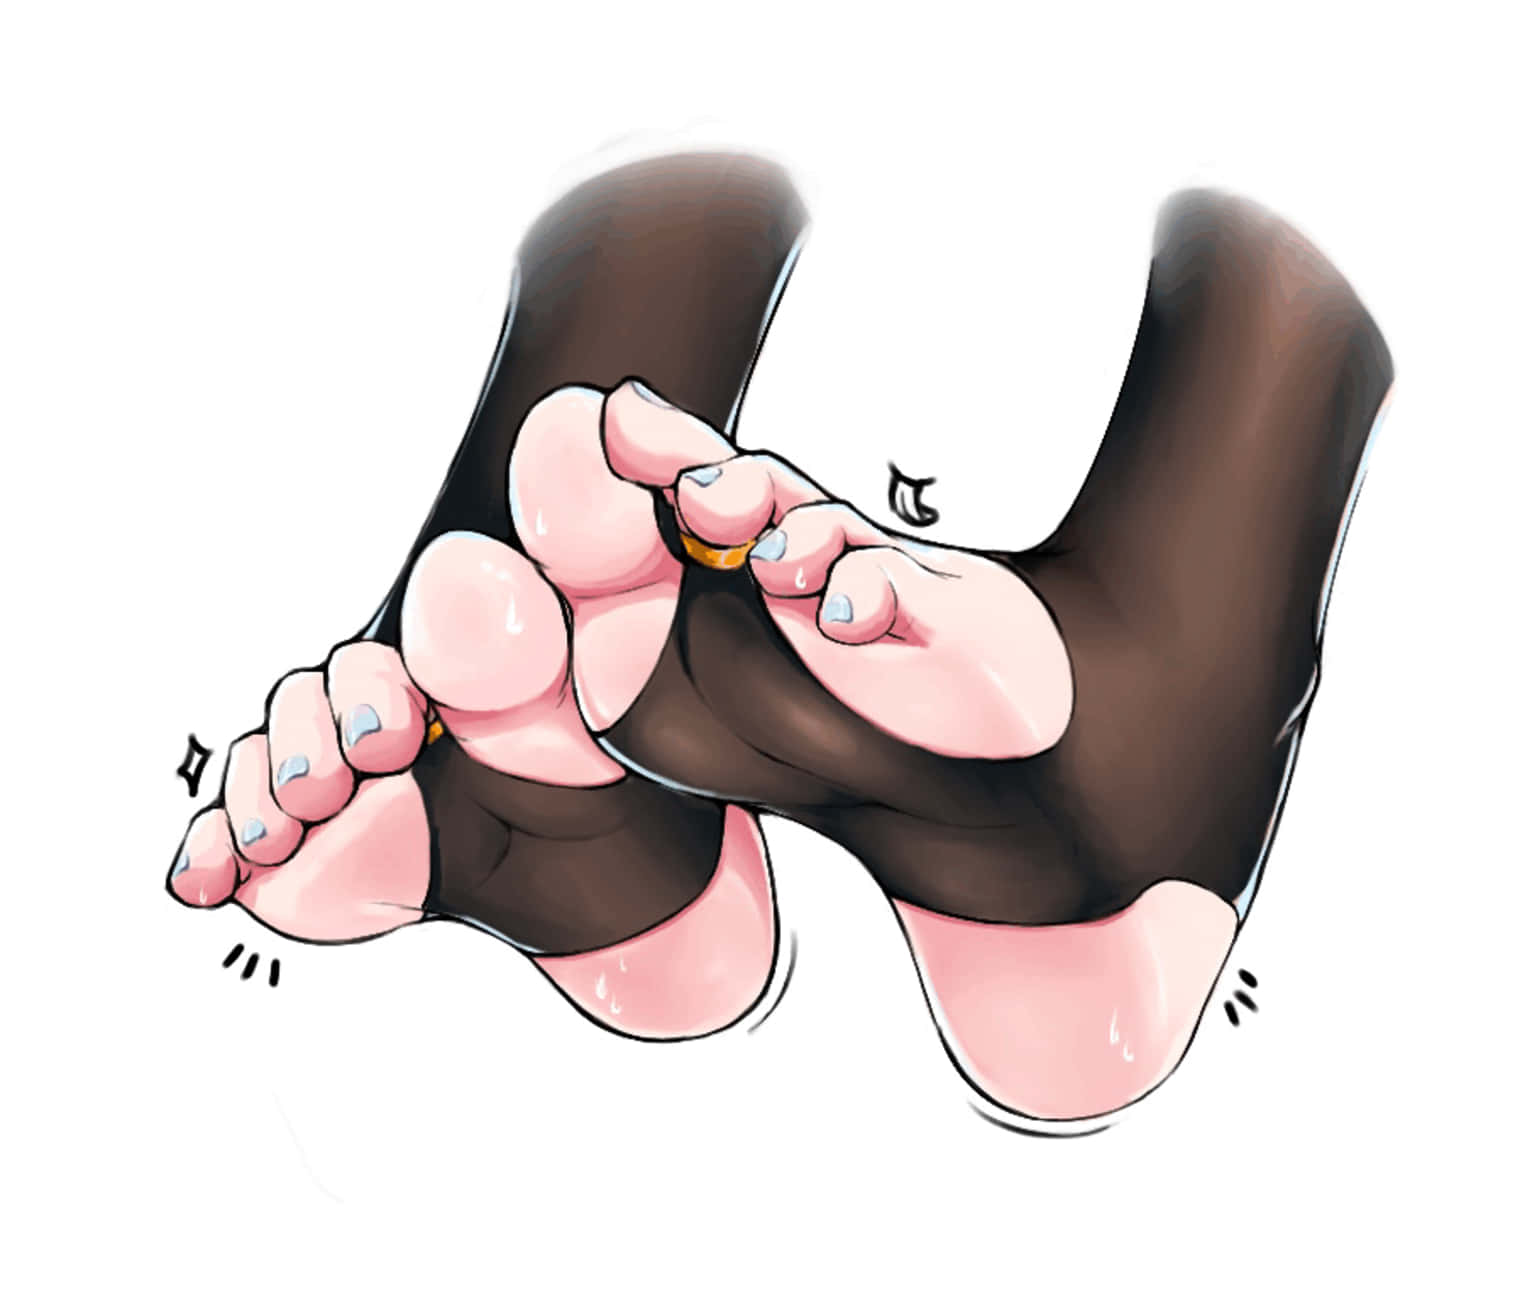 Anime feet art